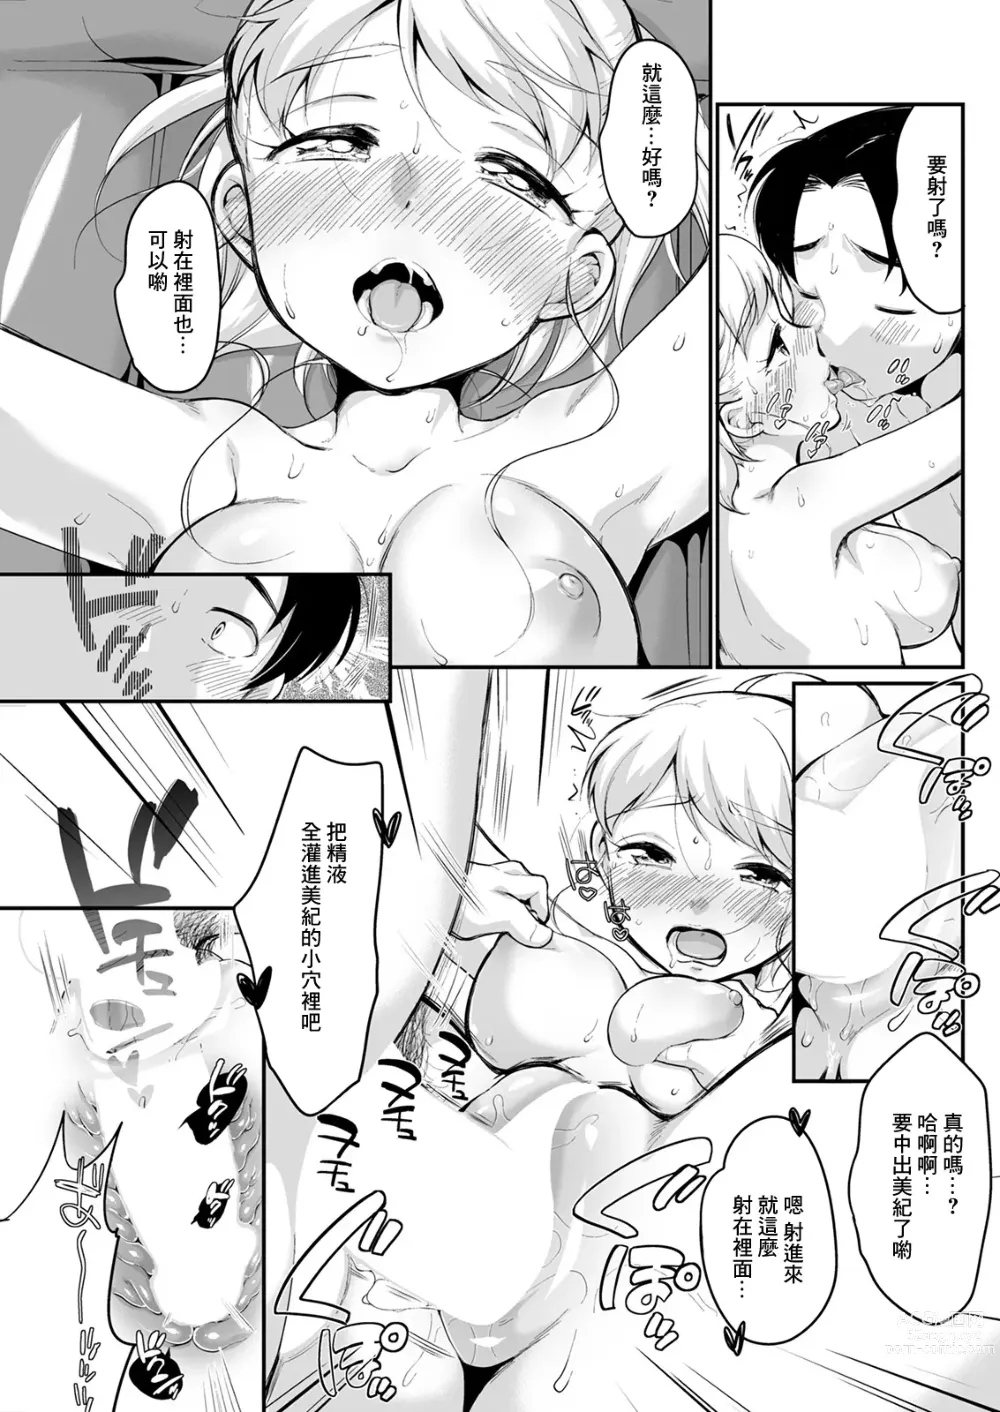 Page 17 of manga Hatsukoi Soapland